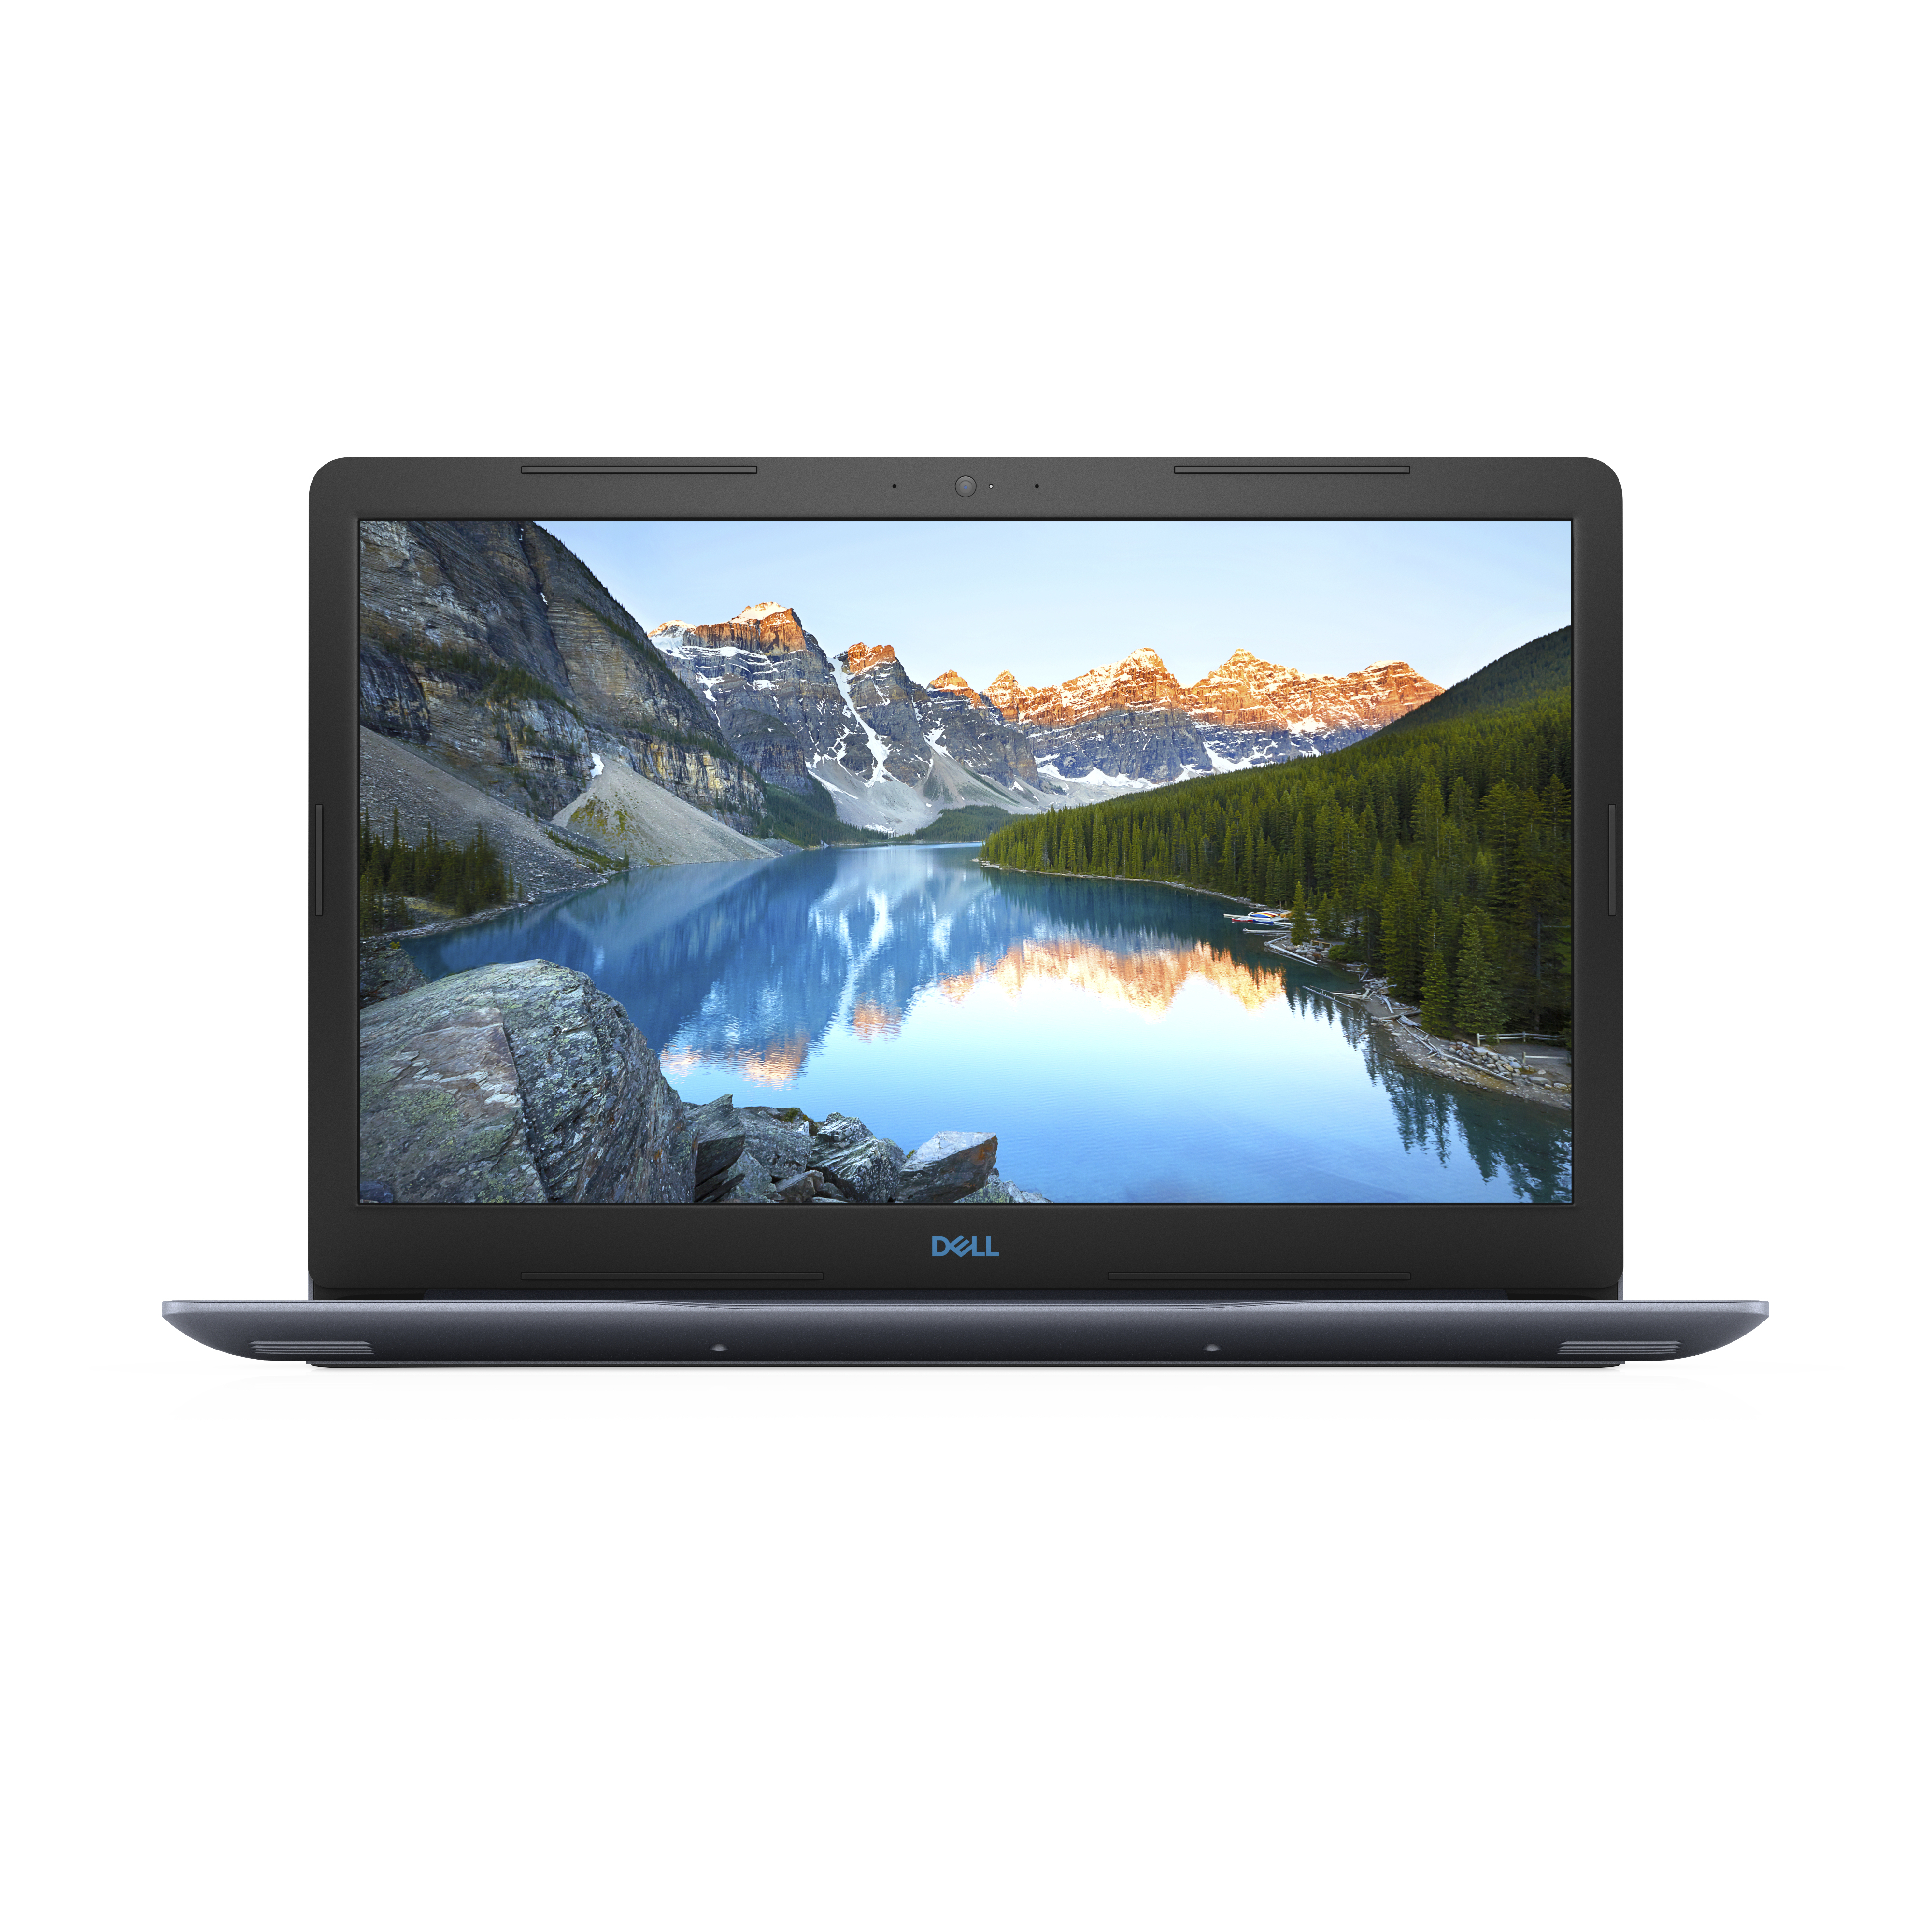 Laptop Dell G3 Core I7 8750 16G 2T+256G Gtx1060 6Gb 17.3" W10 73M2V